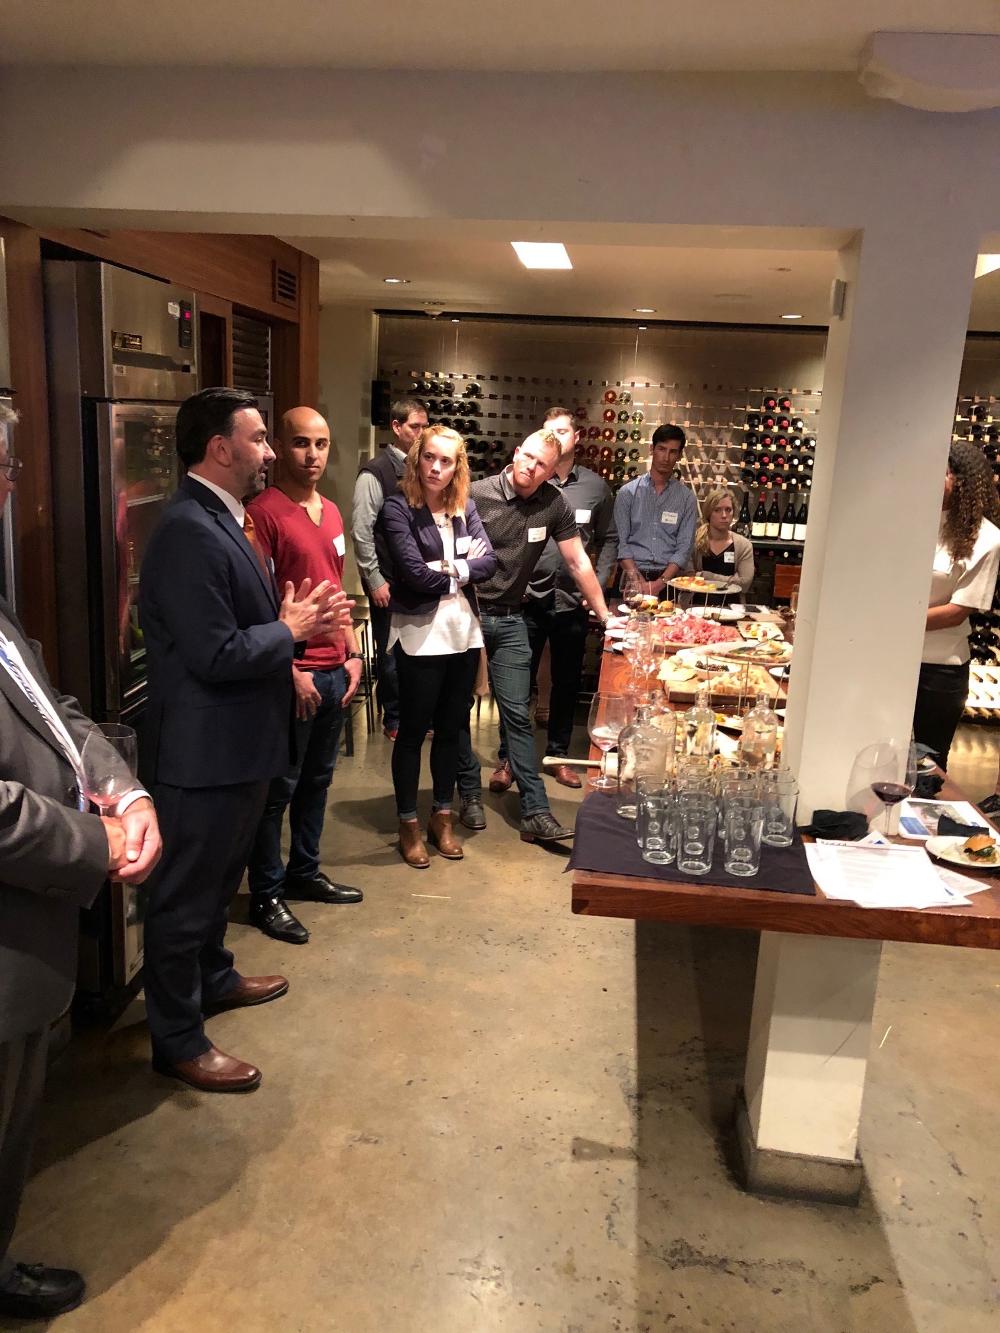 Alumni gathered at reception in Wine cellar